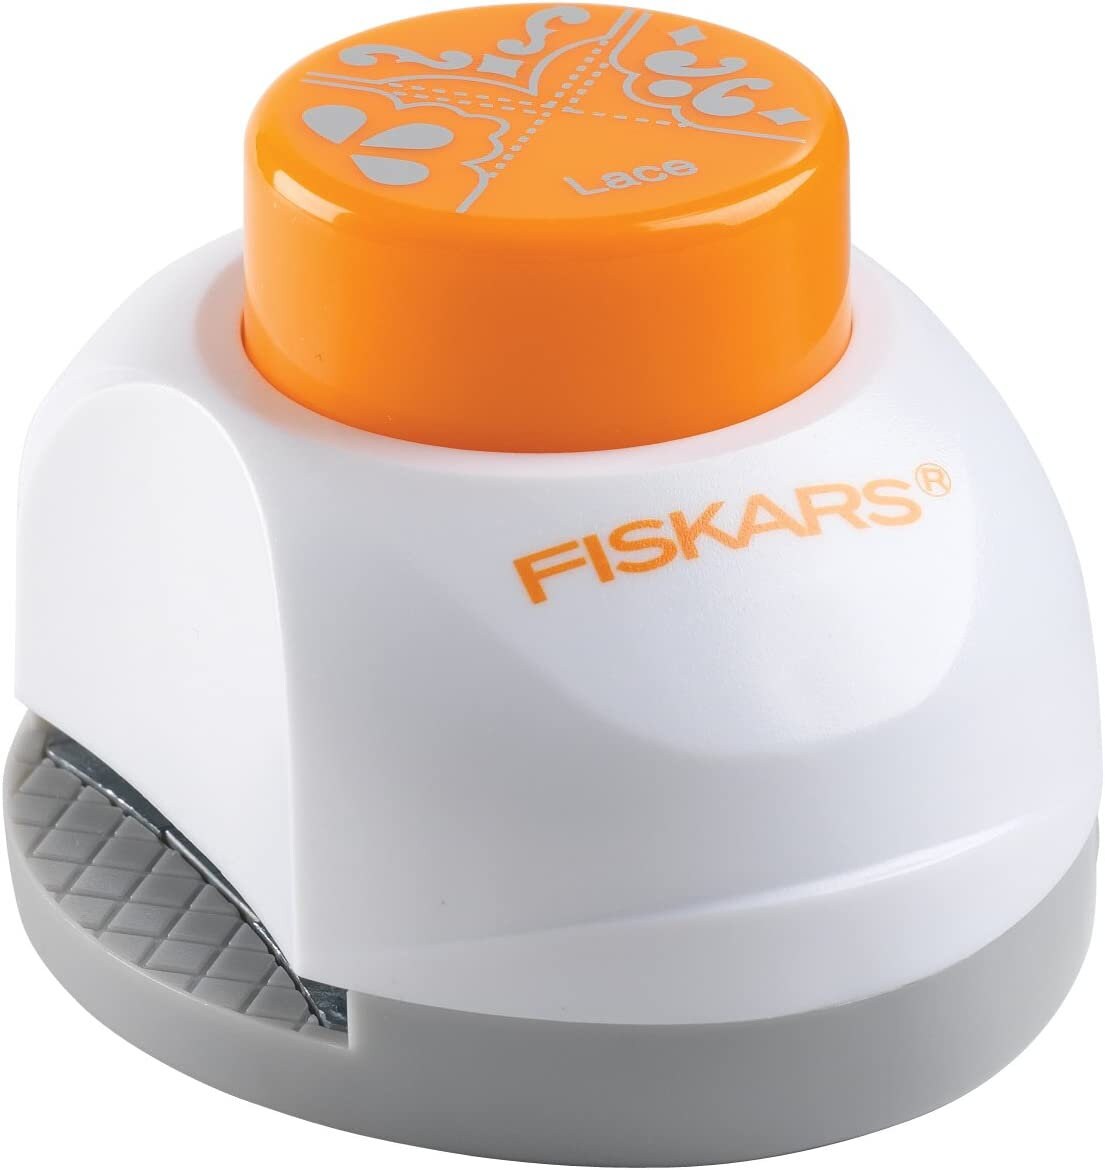 Fiskars 114480-1002 Corner Punch Lift Twist 2 Sizes Small & Large